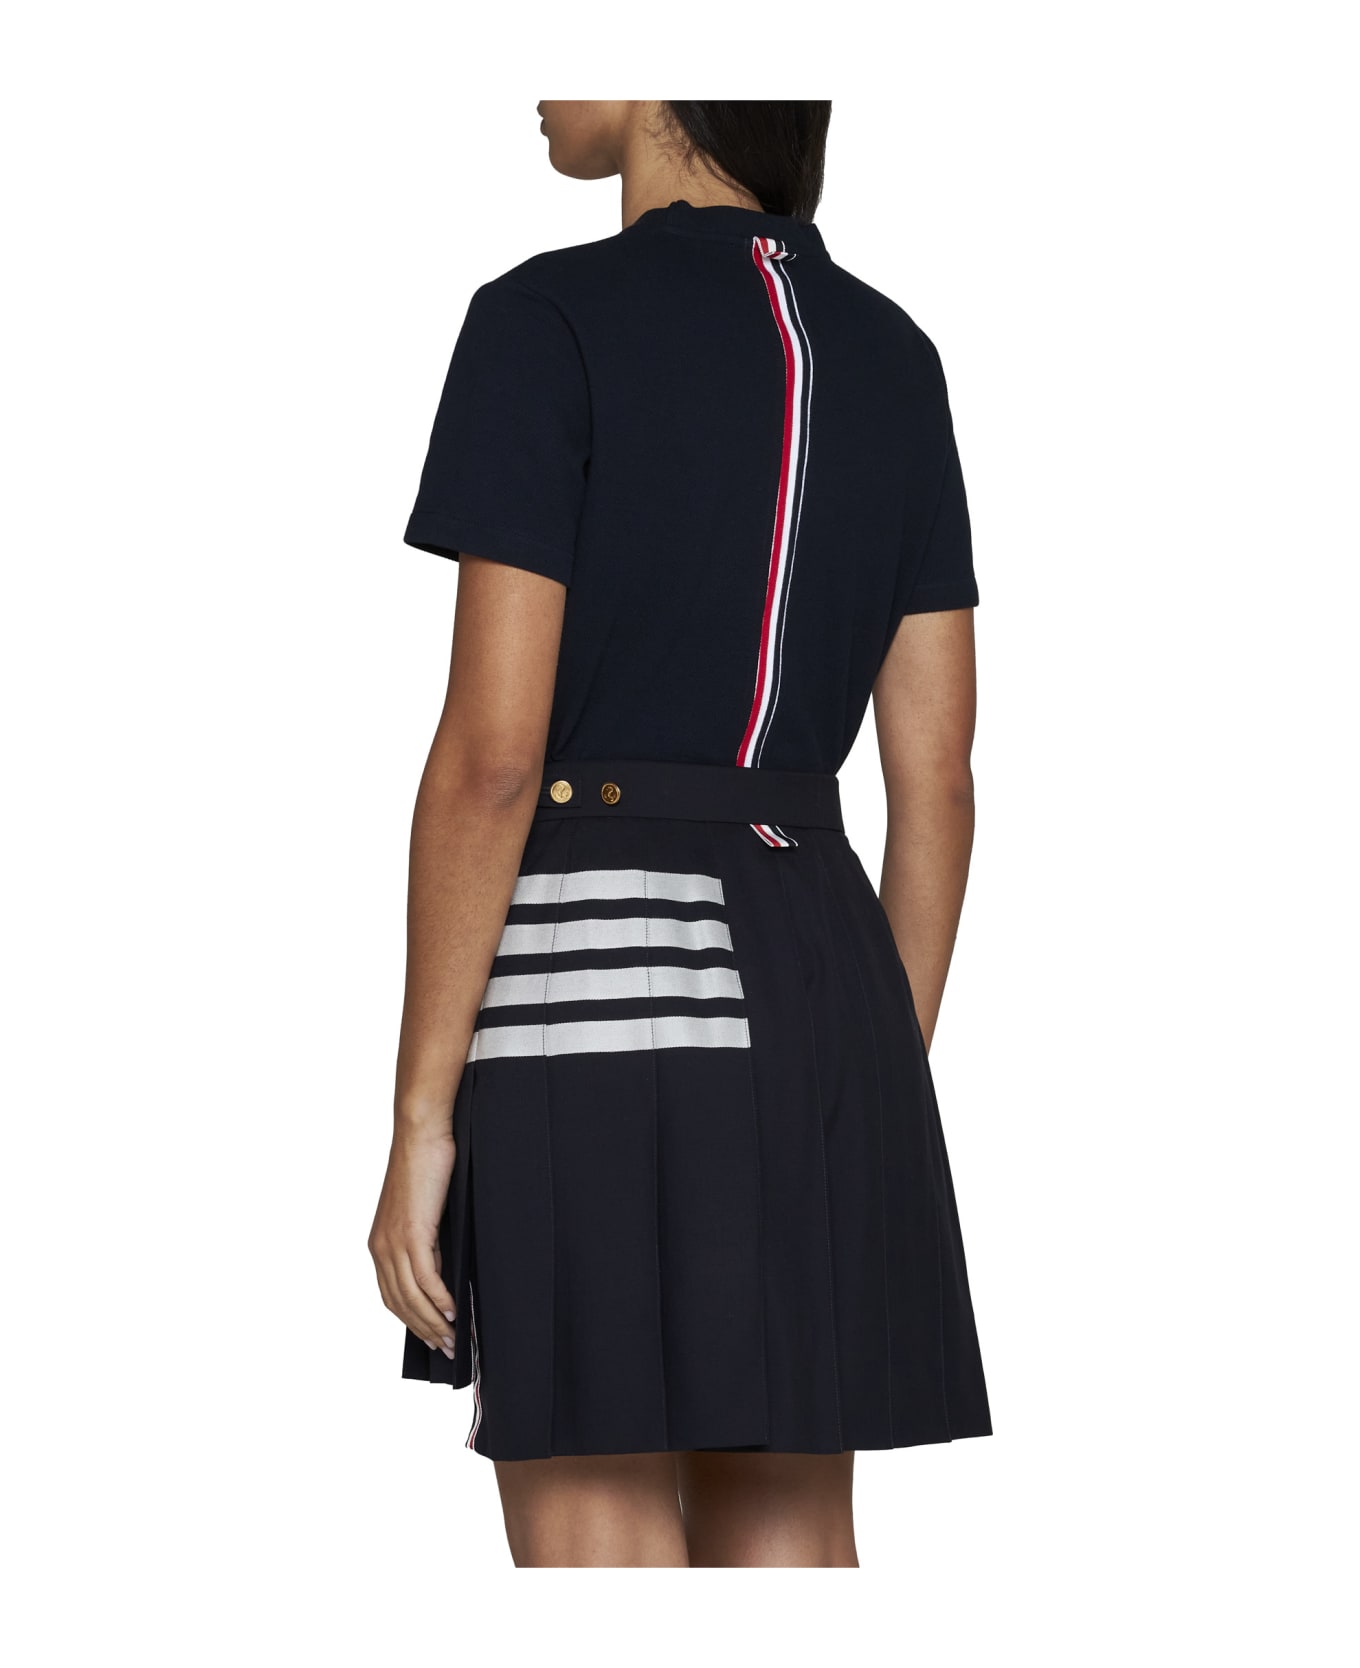 Thom Browne '4 Bar Skirt - Navy スカート